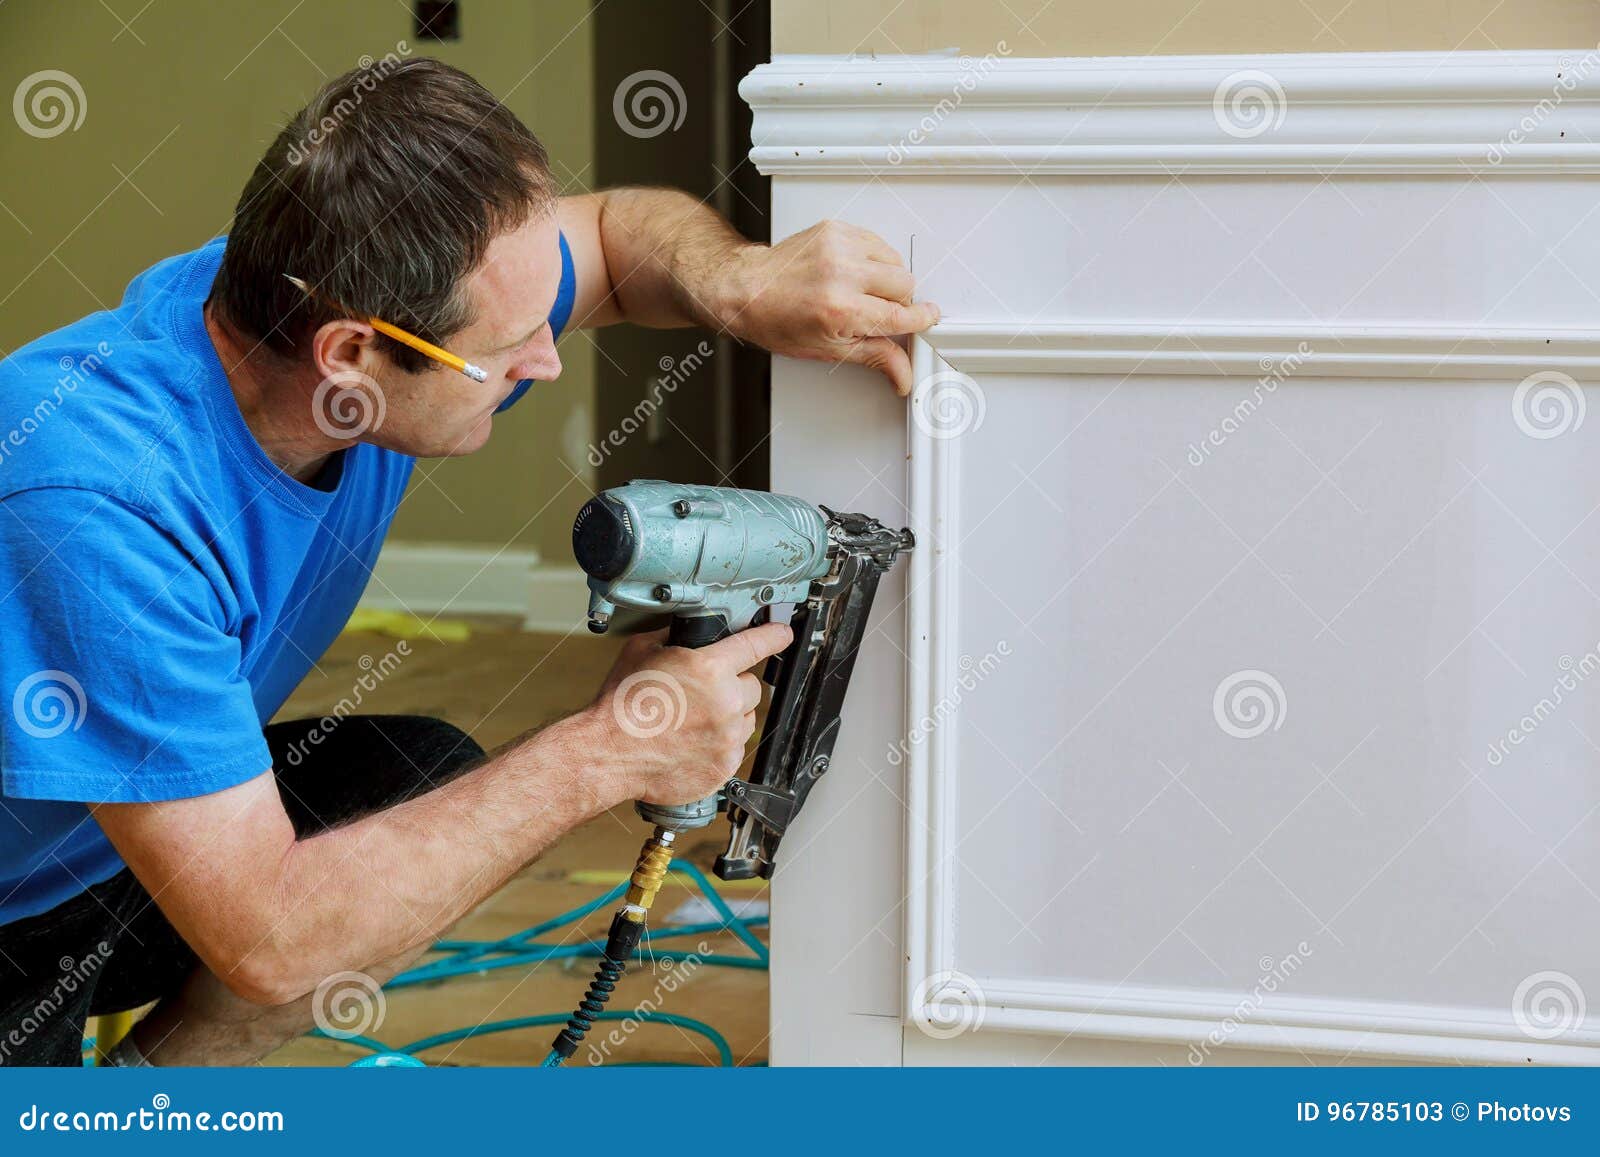 carpenter using a brad nail gun to complete framing trim